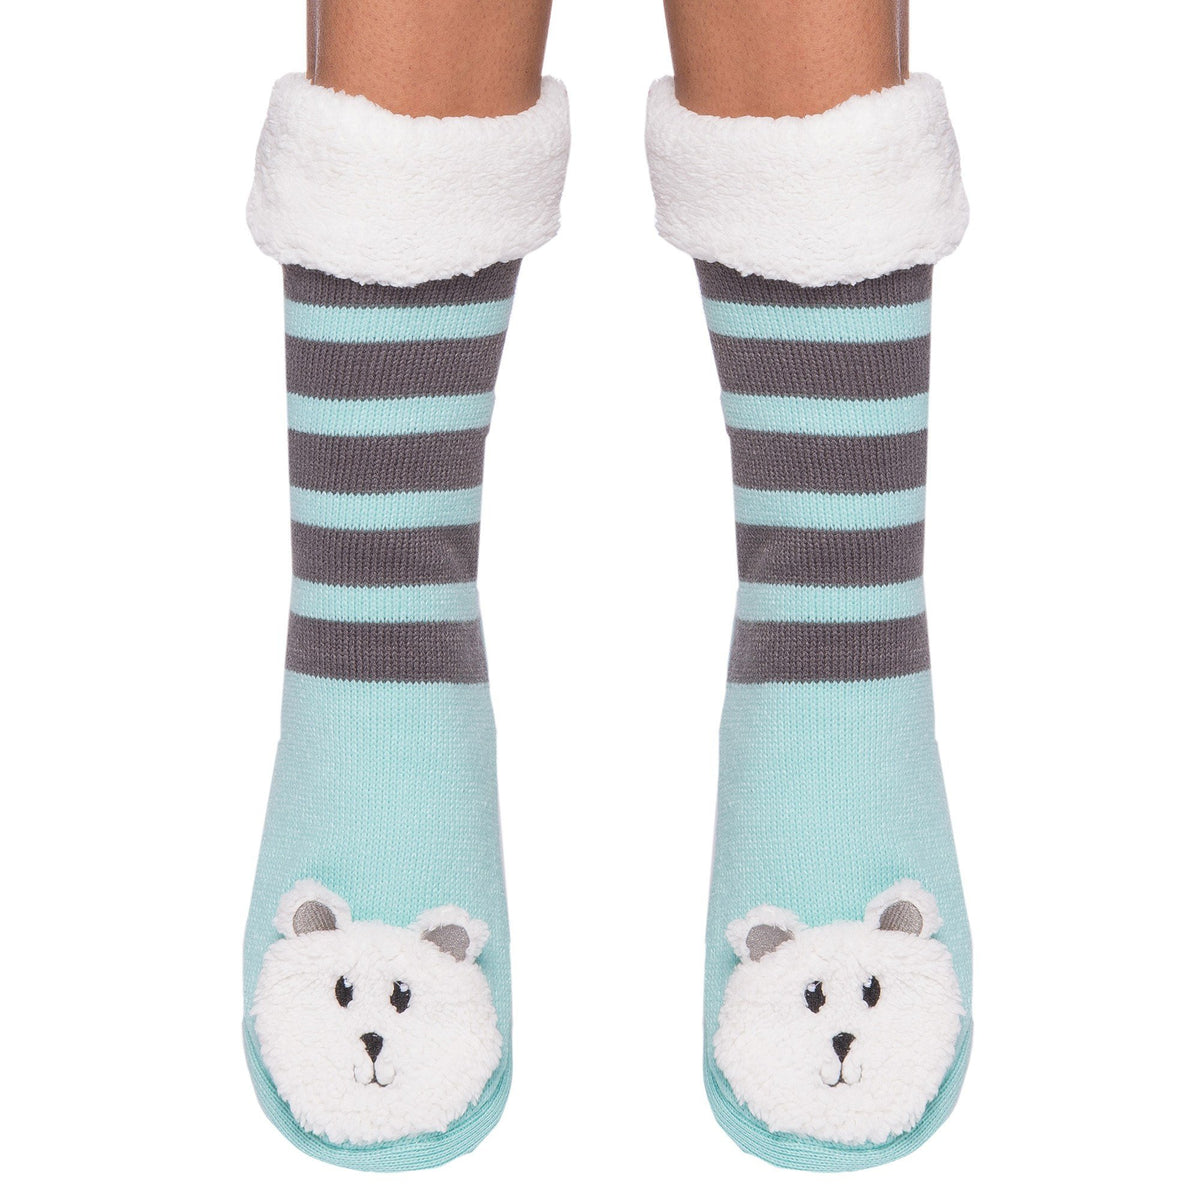 Women's Cute Knit Animal Face Slipper Socks - Polar Bear Aqua